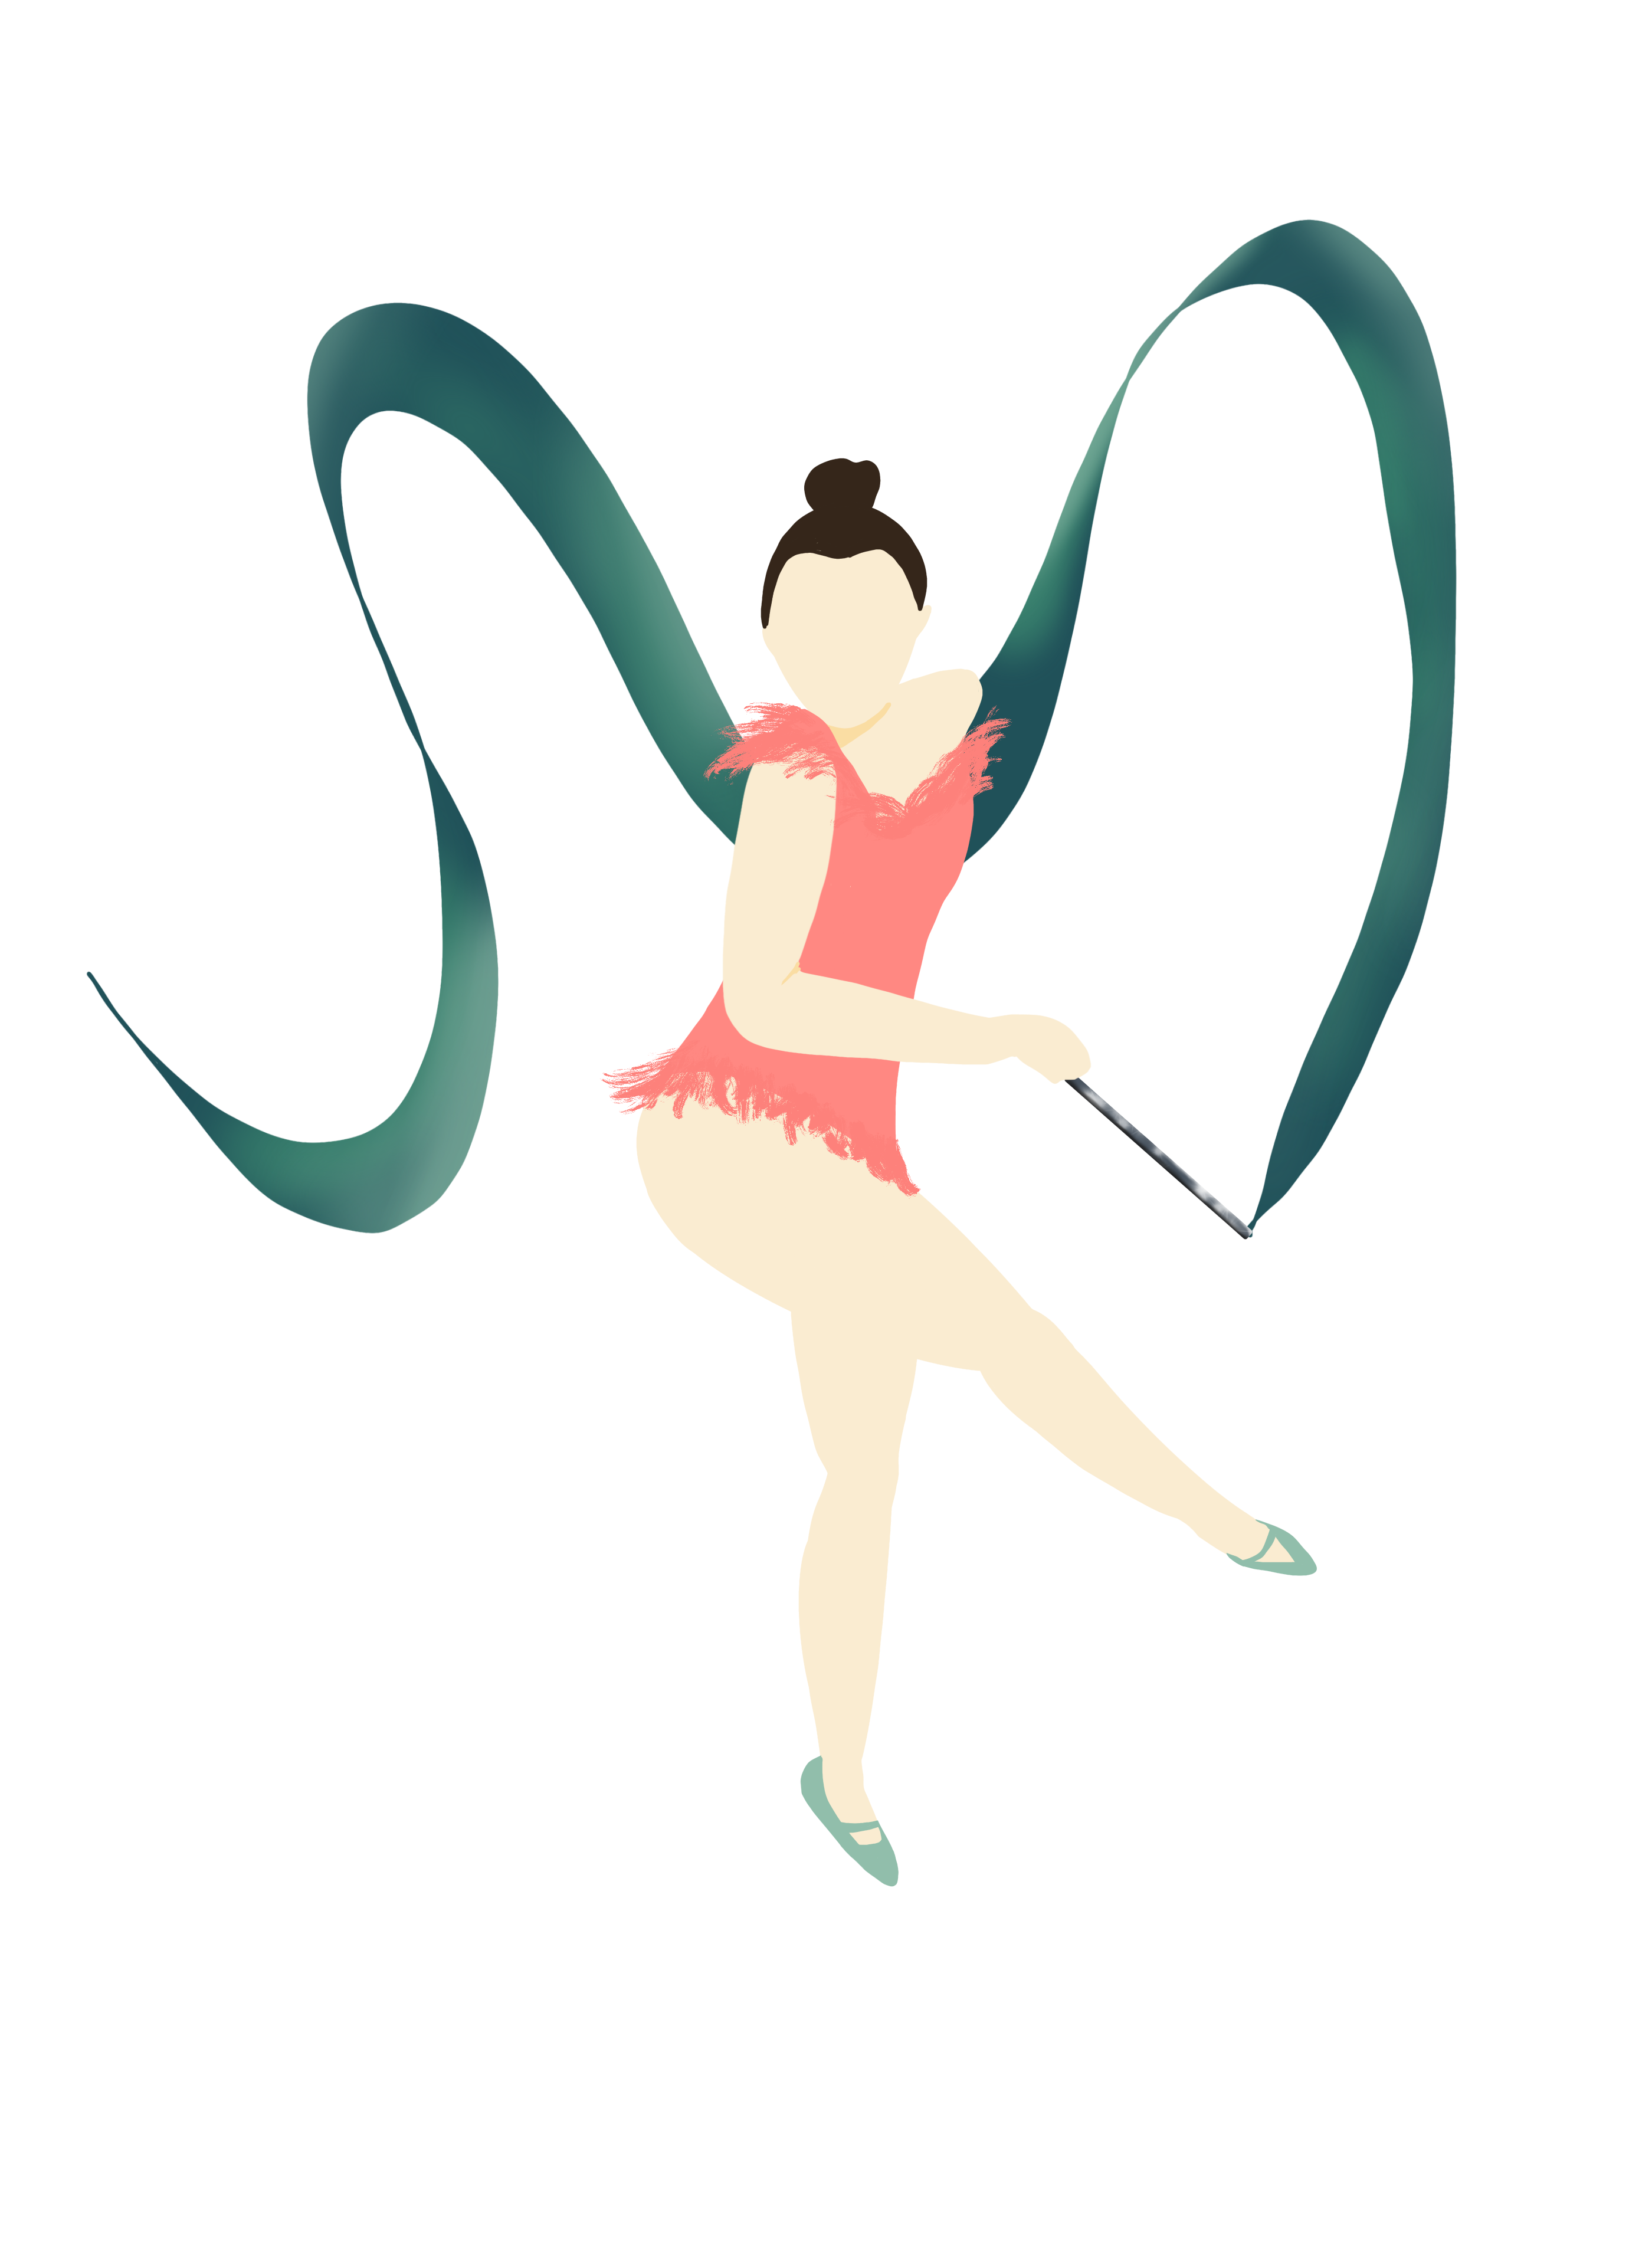 Girl doing rhytmic gymnastics